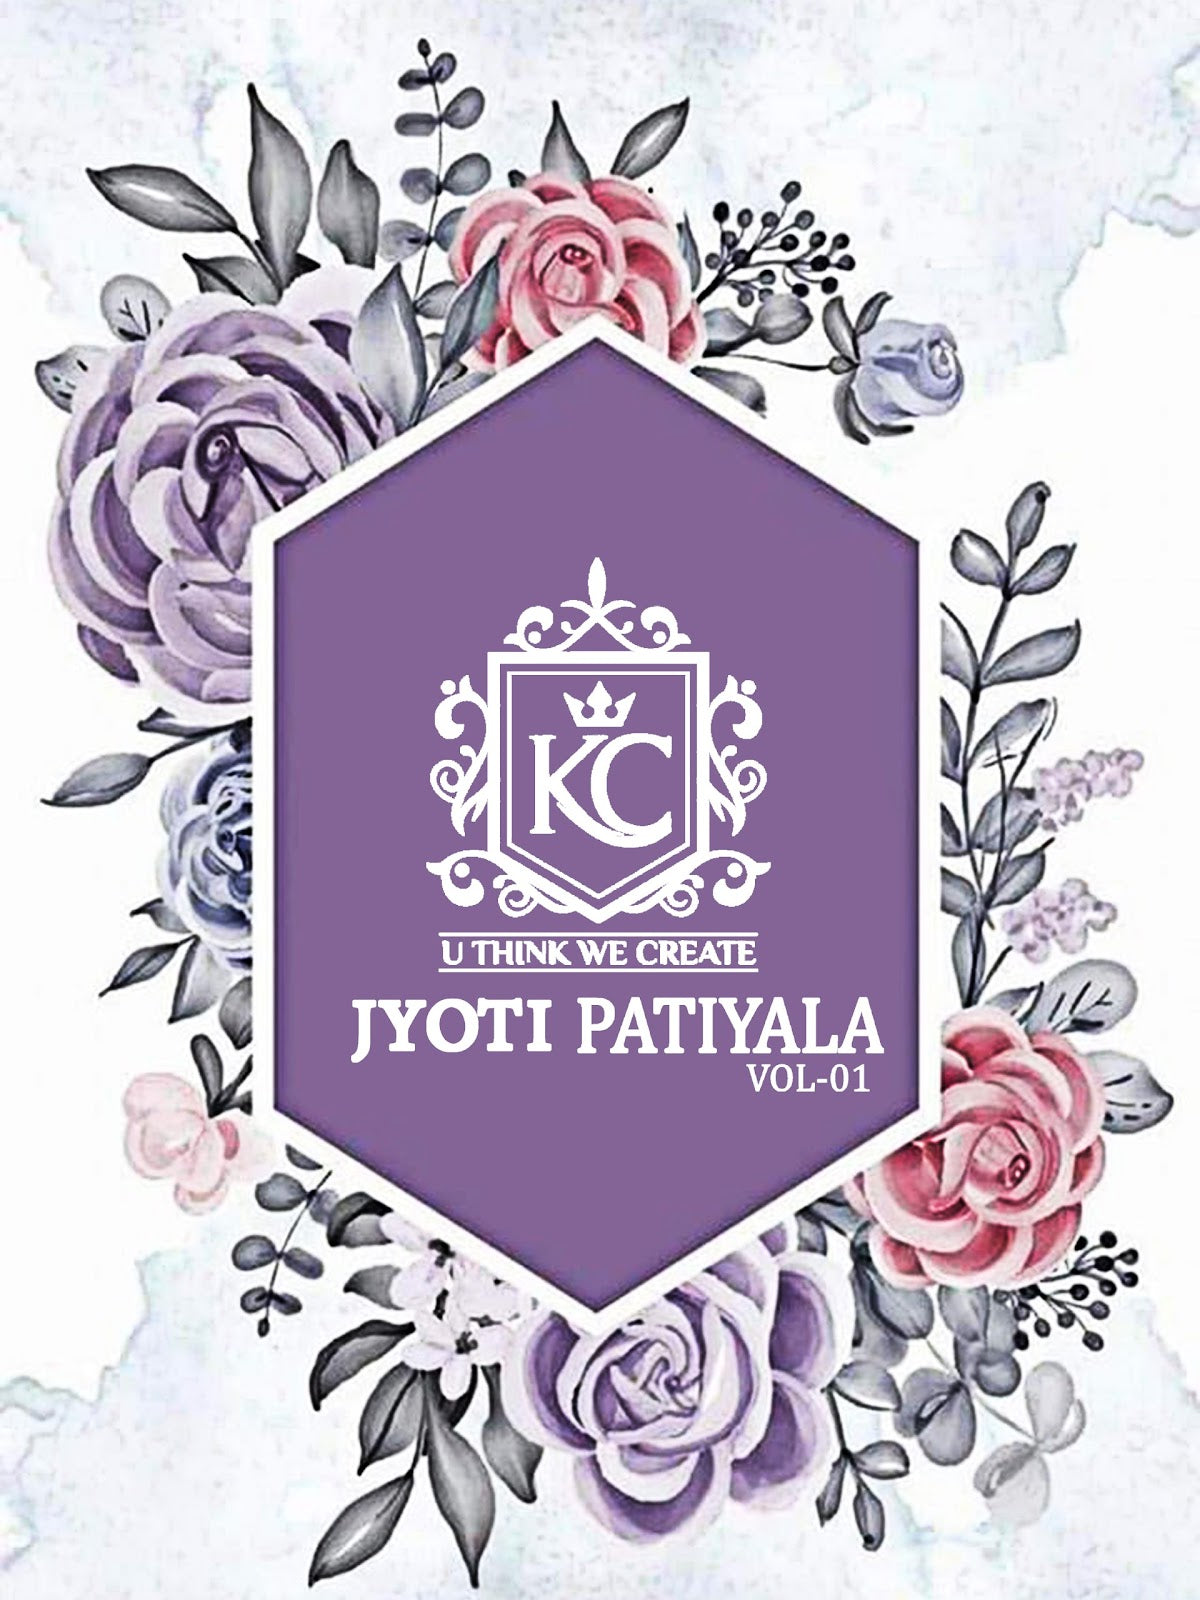 Jyoti Vol 1 Kcf Readymade Cotton Patiyala Suits